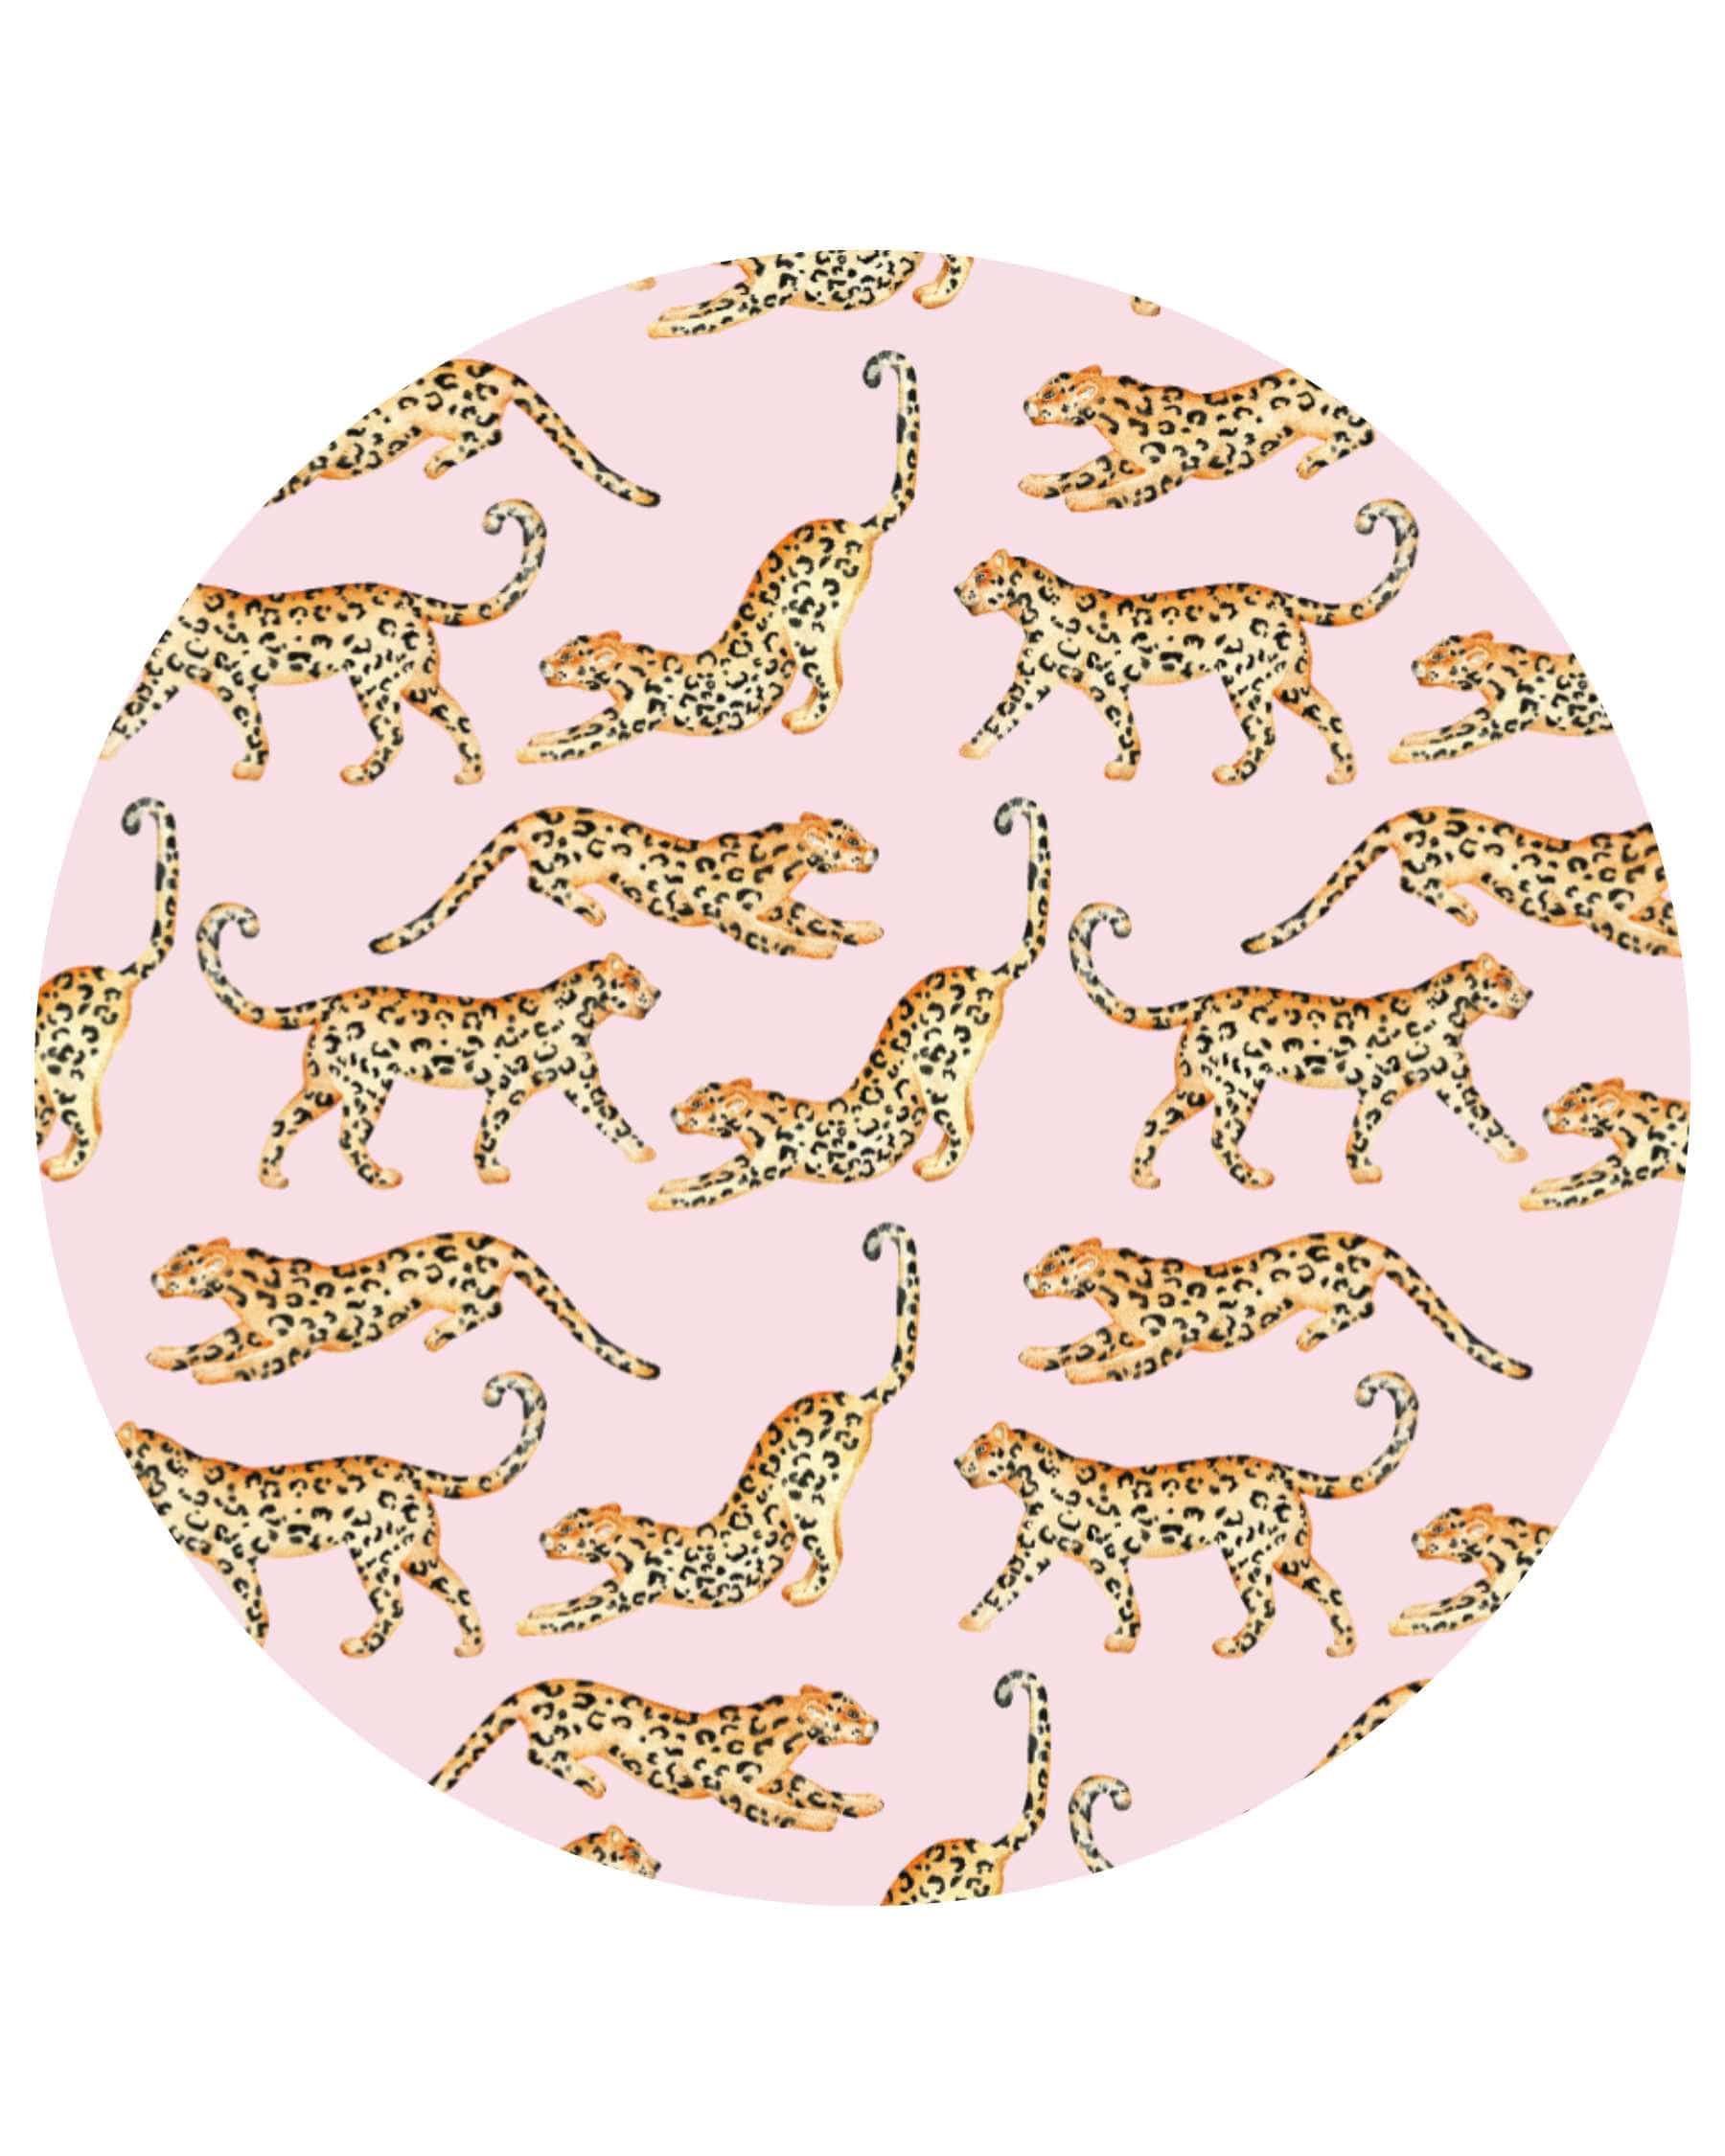 Cheetah Changing Pad Cover